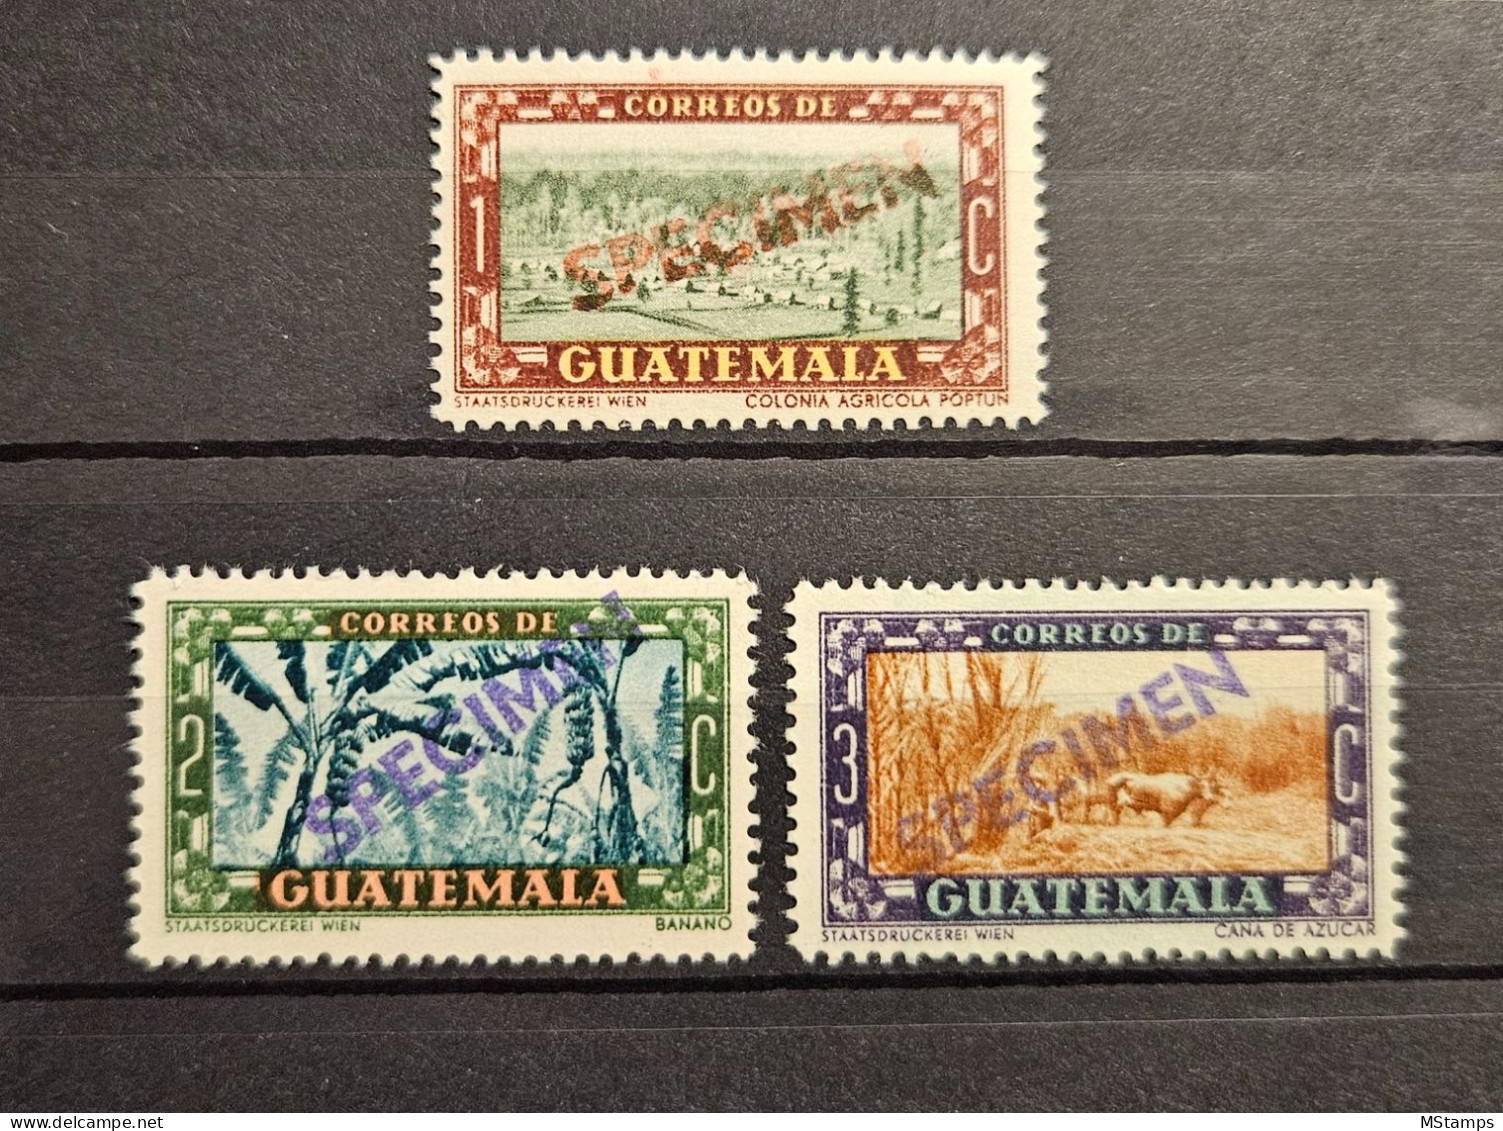 Guatemala SPECIMENS 1950 - Guatemala